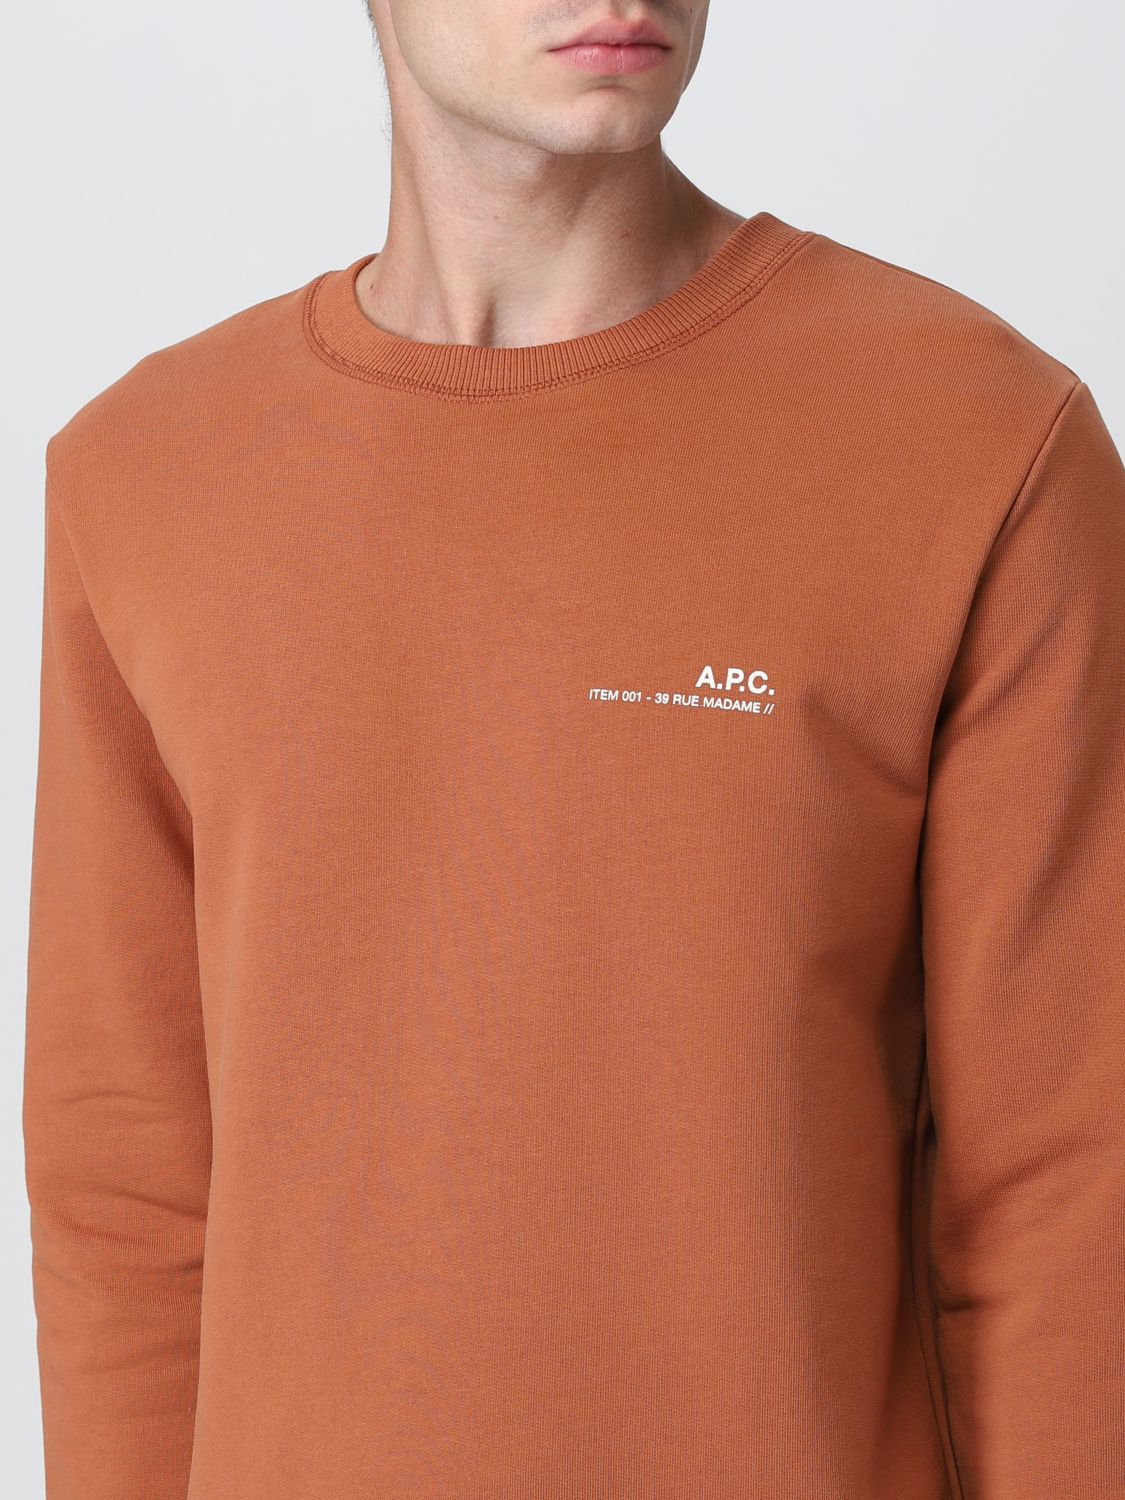 A.P.C.: sweatshirt for men - Brick Red | A.p.c. sweatshirt COFBQH27608